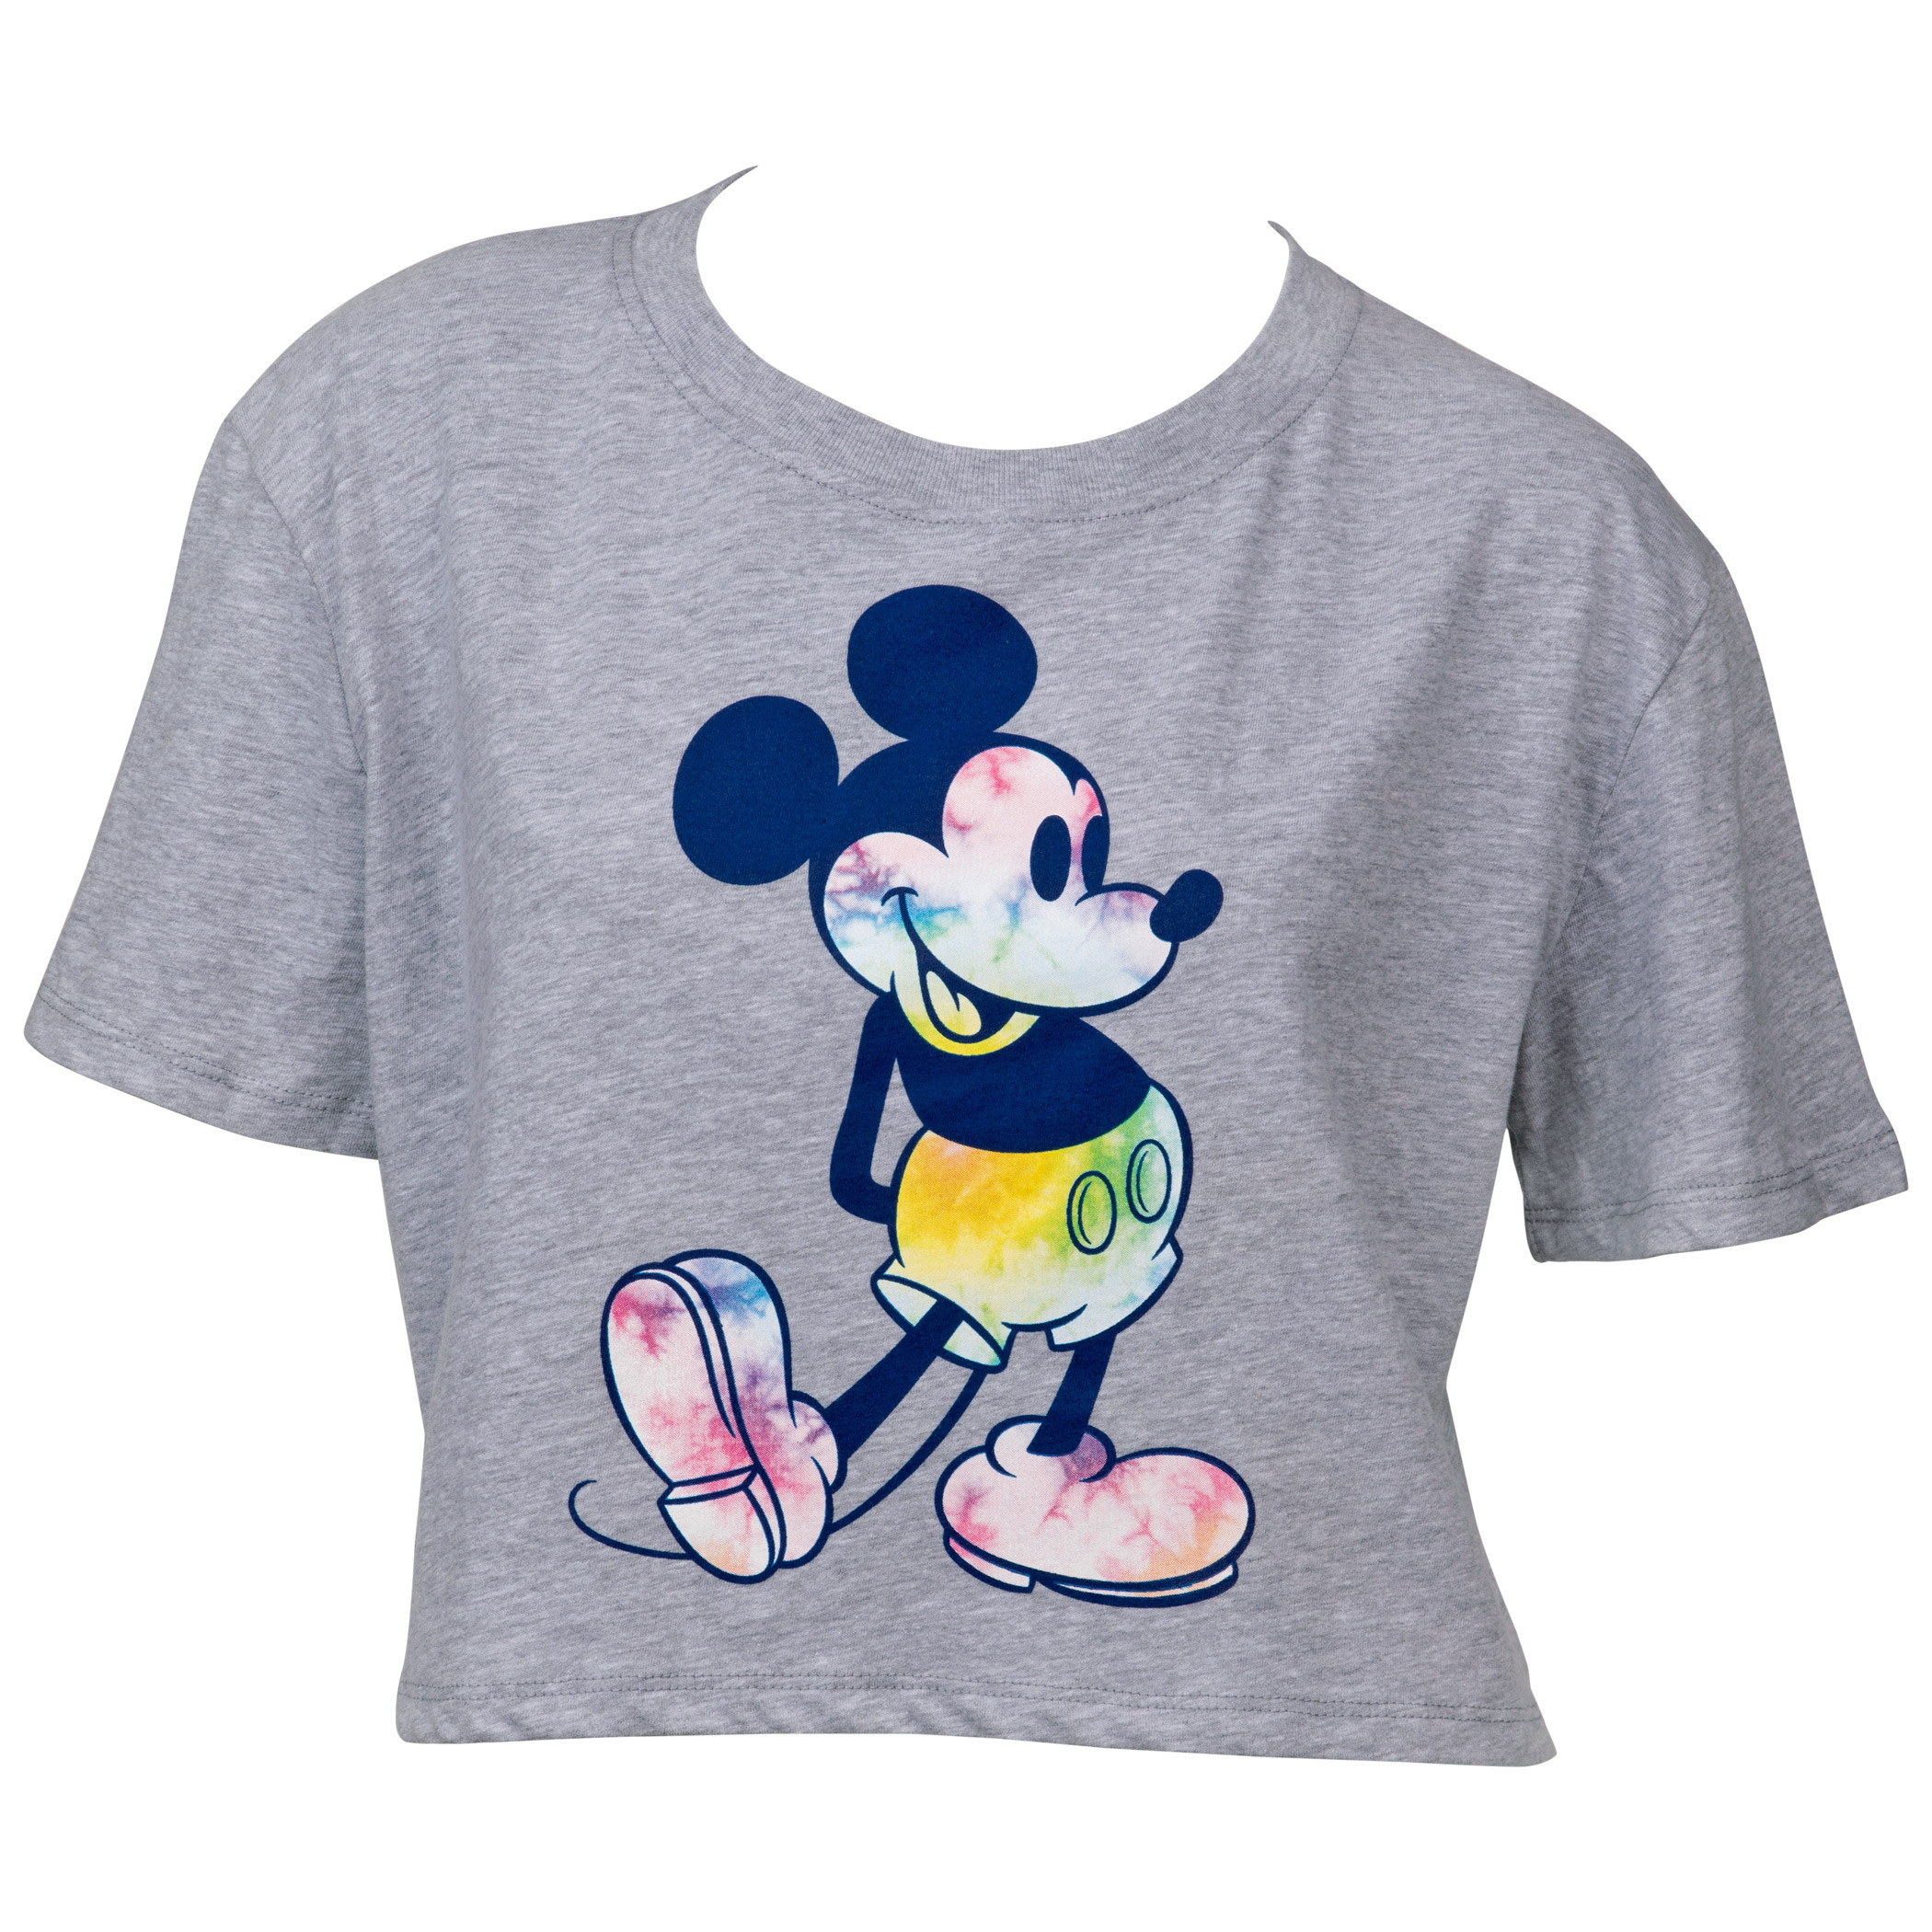 Disney Mickey Mouse Rainbow Character Crop Top Tee